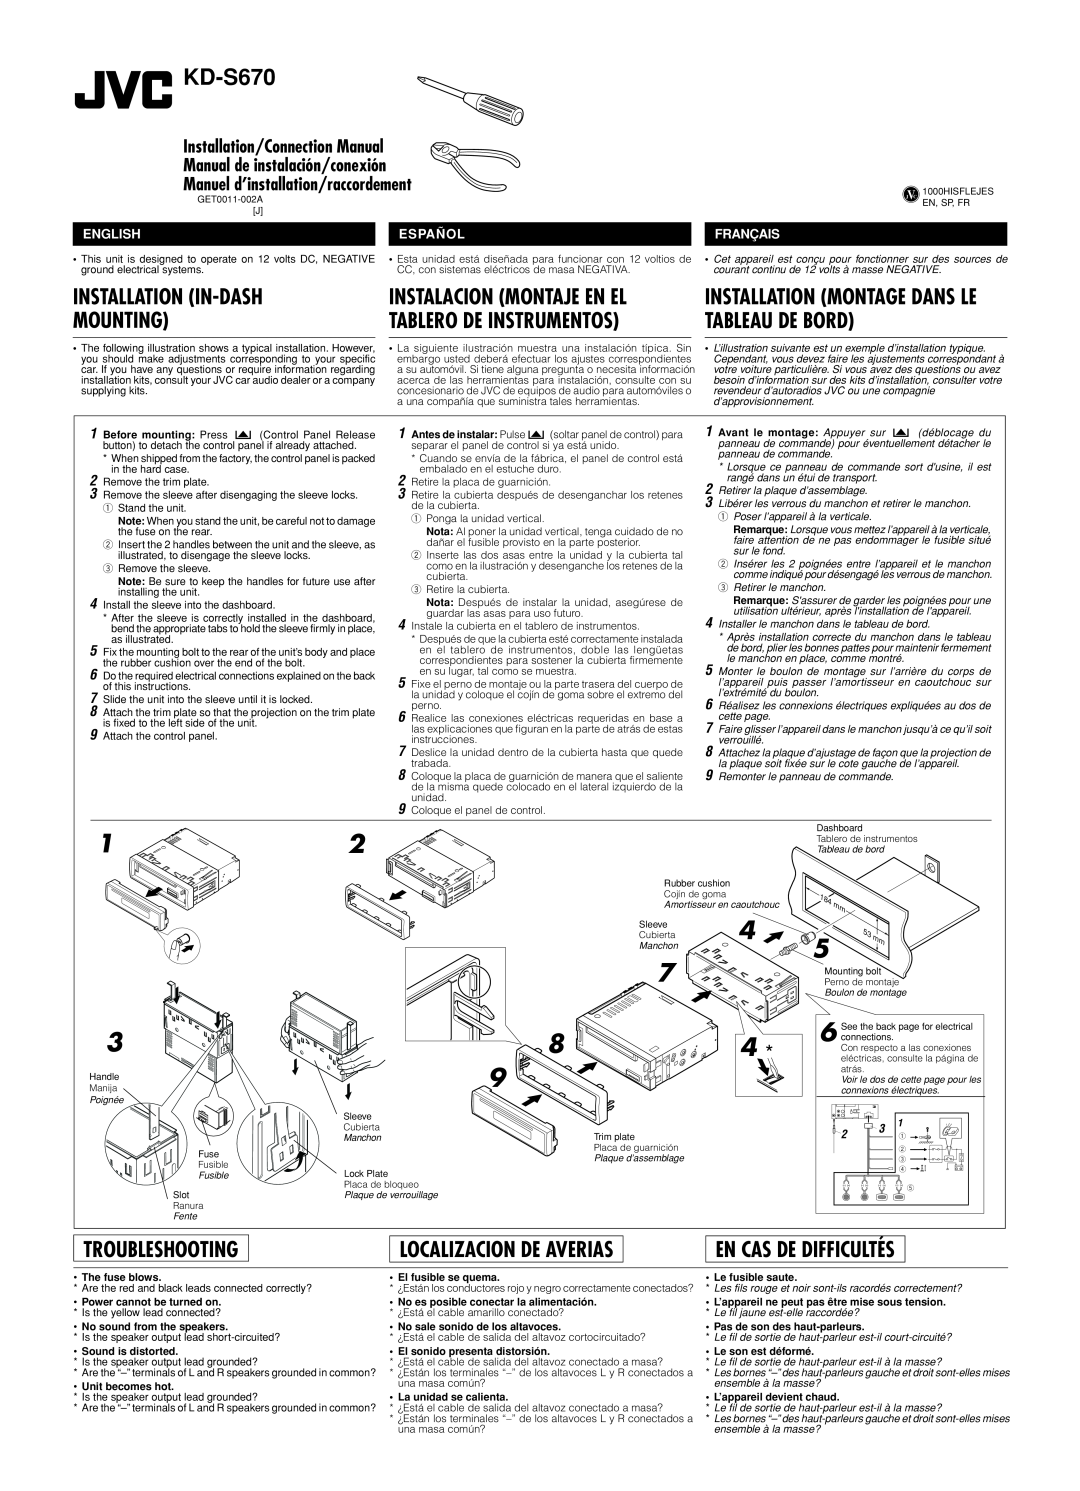 JVC KD-S670 manual Installation In-Dash Mounting, Tableau De Bord, Troubleshooting, Localizacion De Averias 